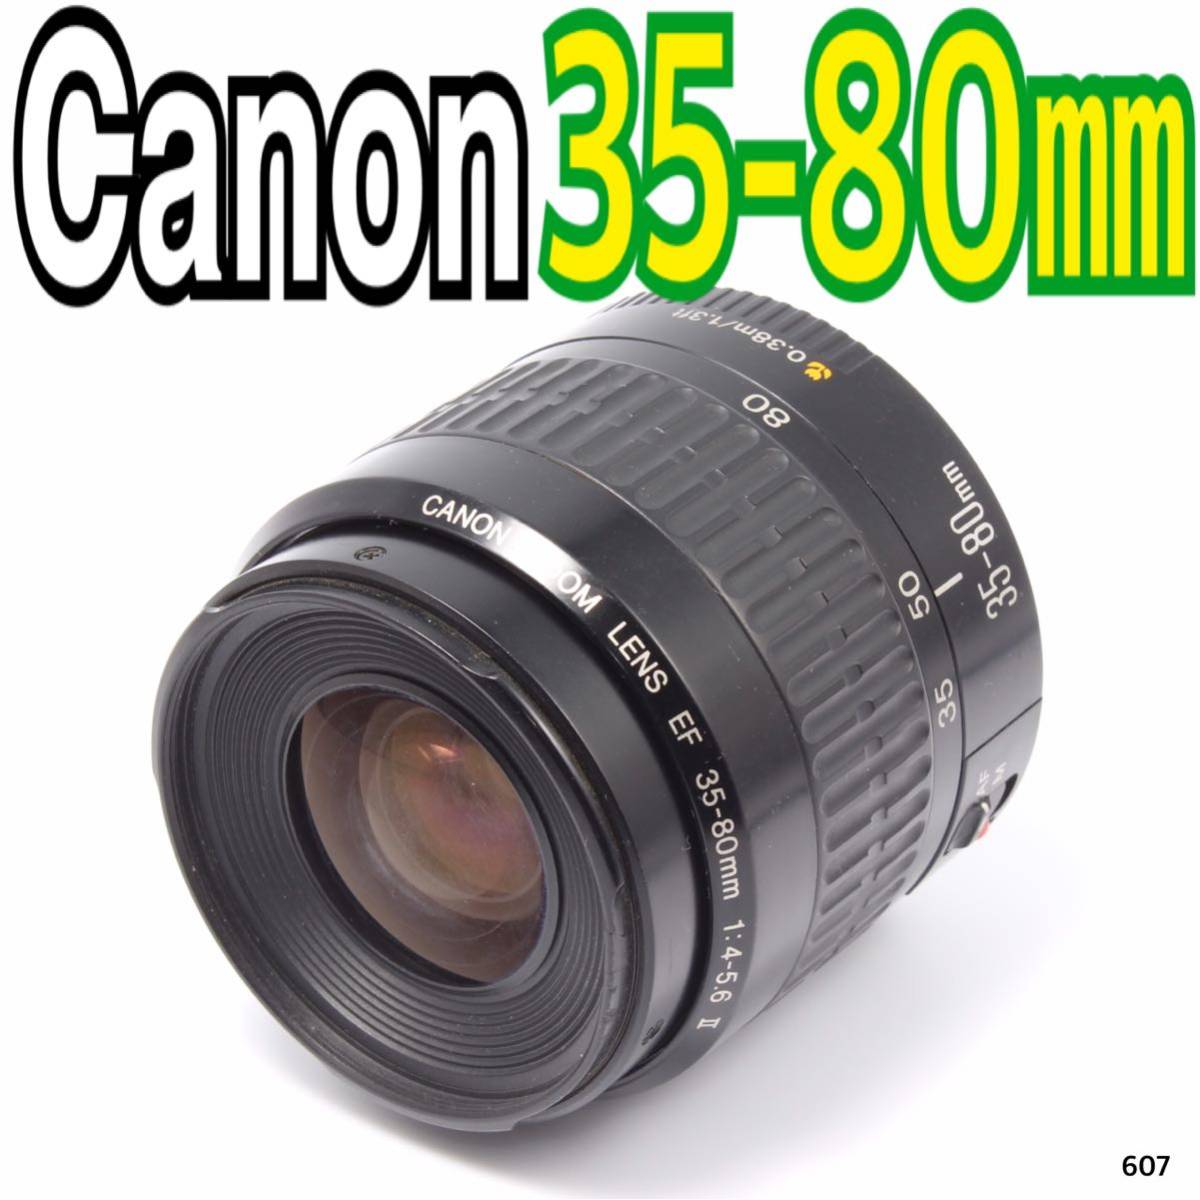 CANON EF 35-80mm F4-5.6